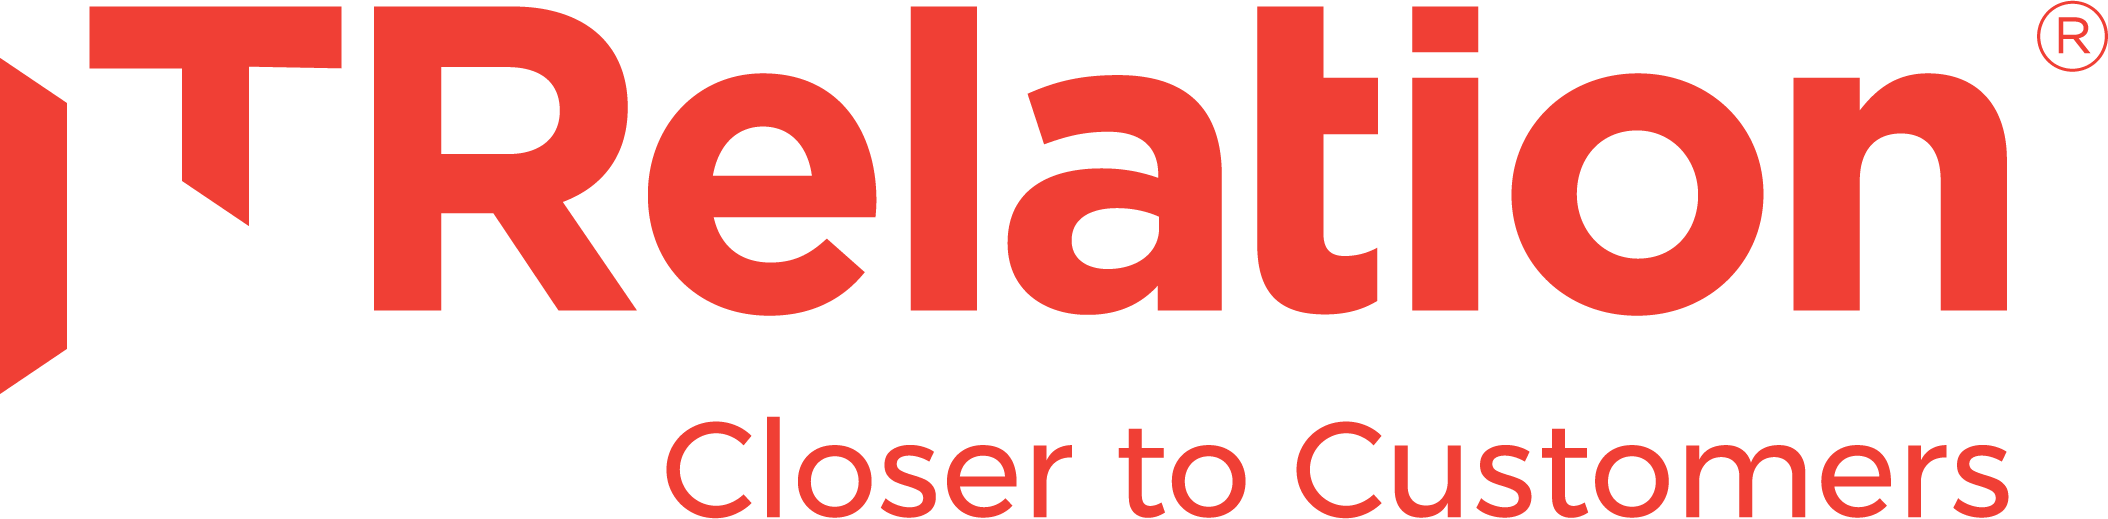 IT-Relation-logo-tagline-RGB